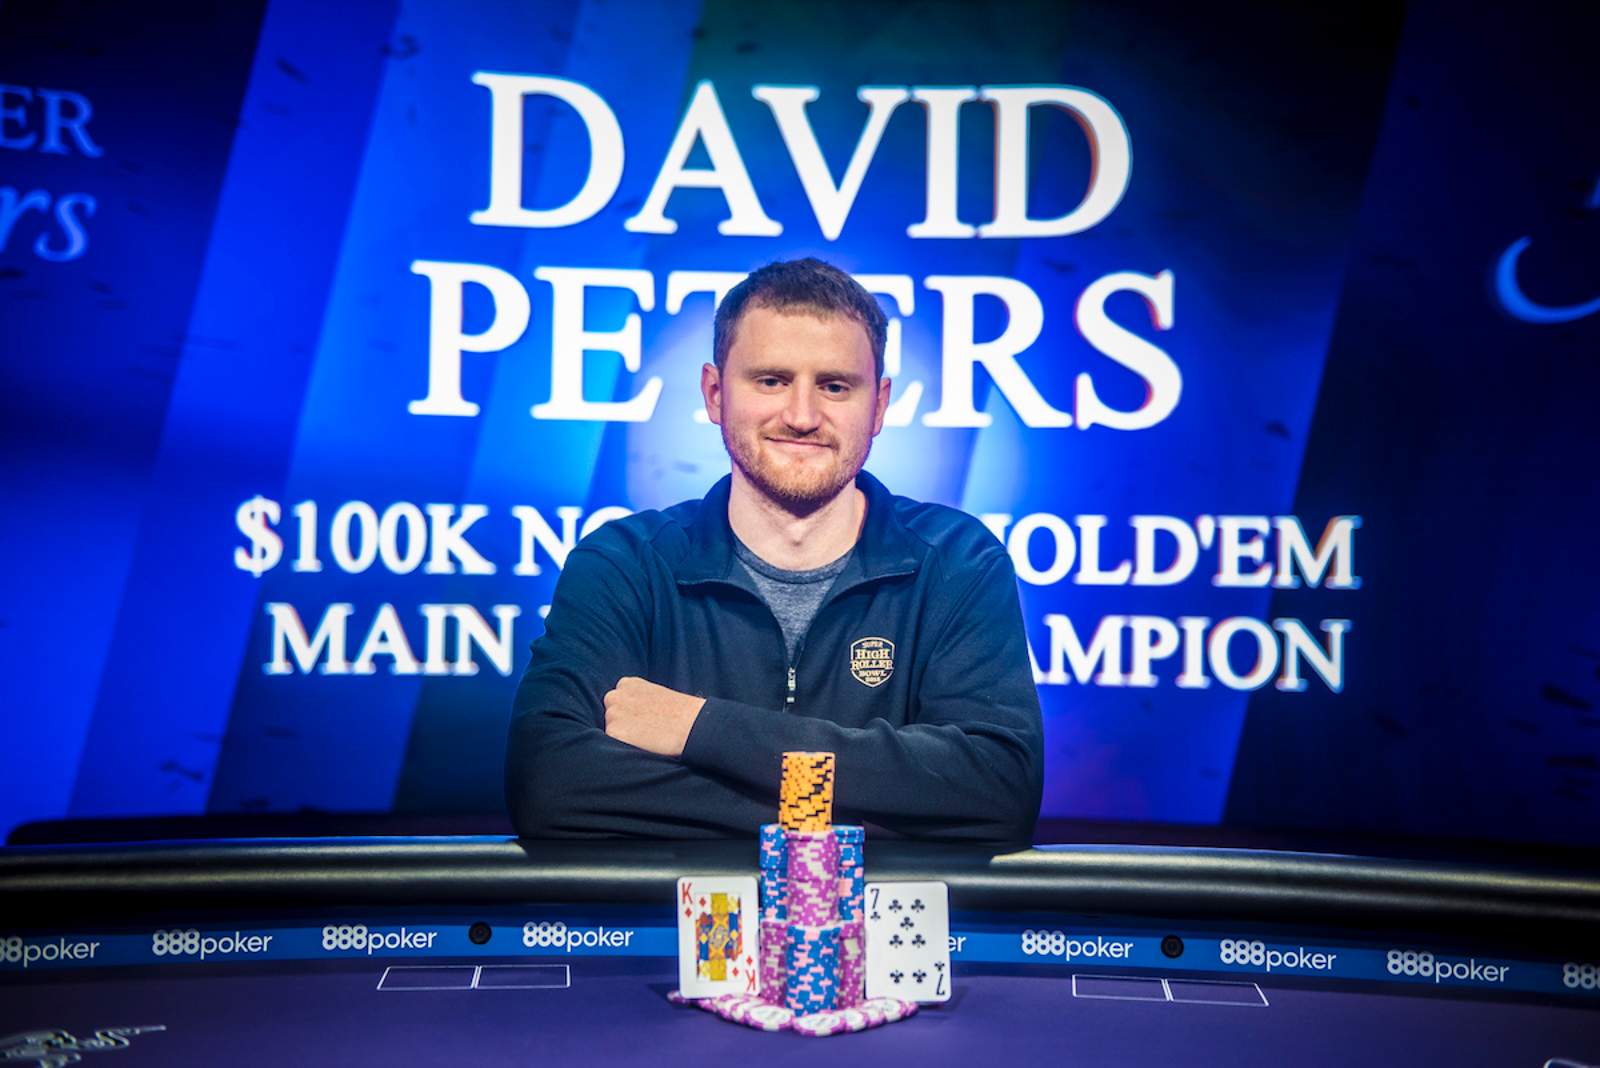 David Peters Wins Poker Masters Main Event on PokerGO